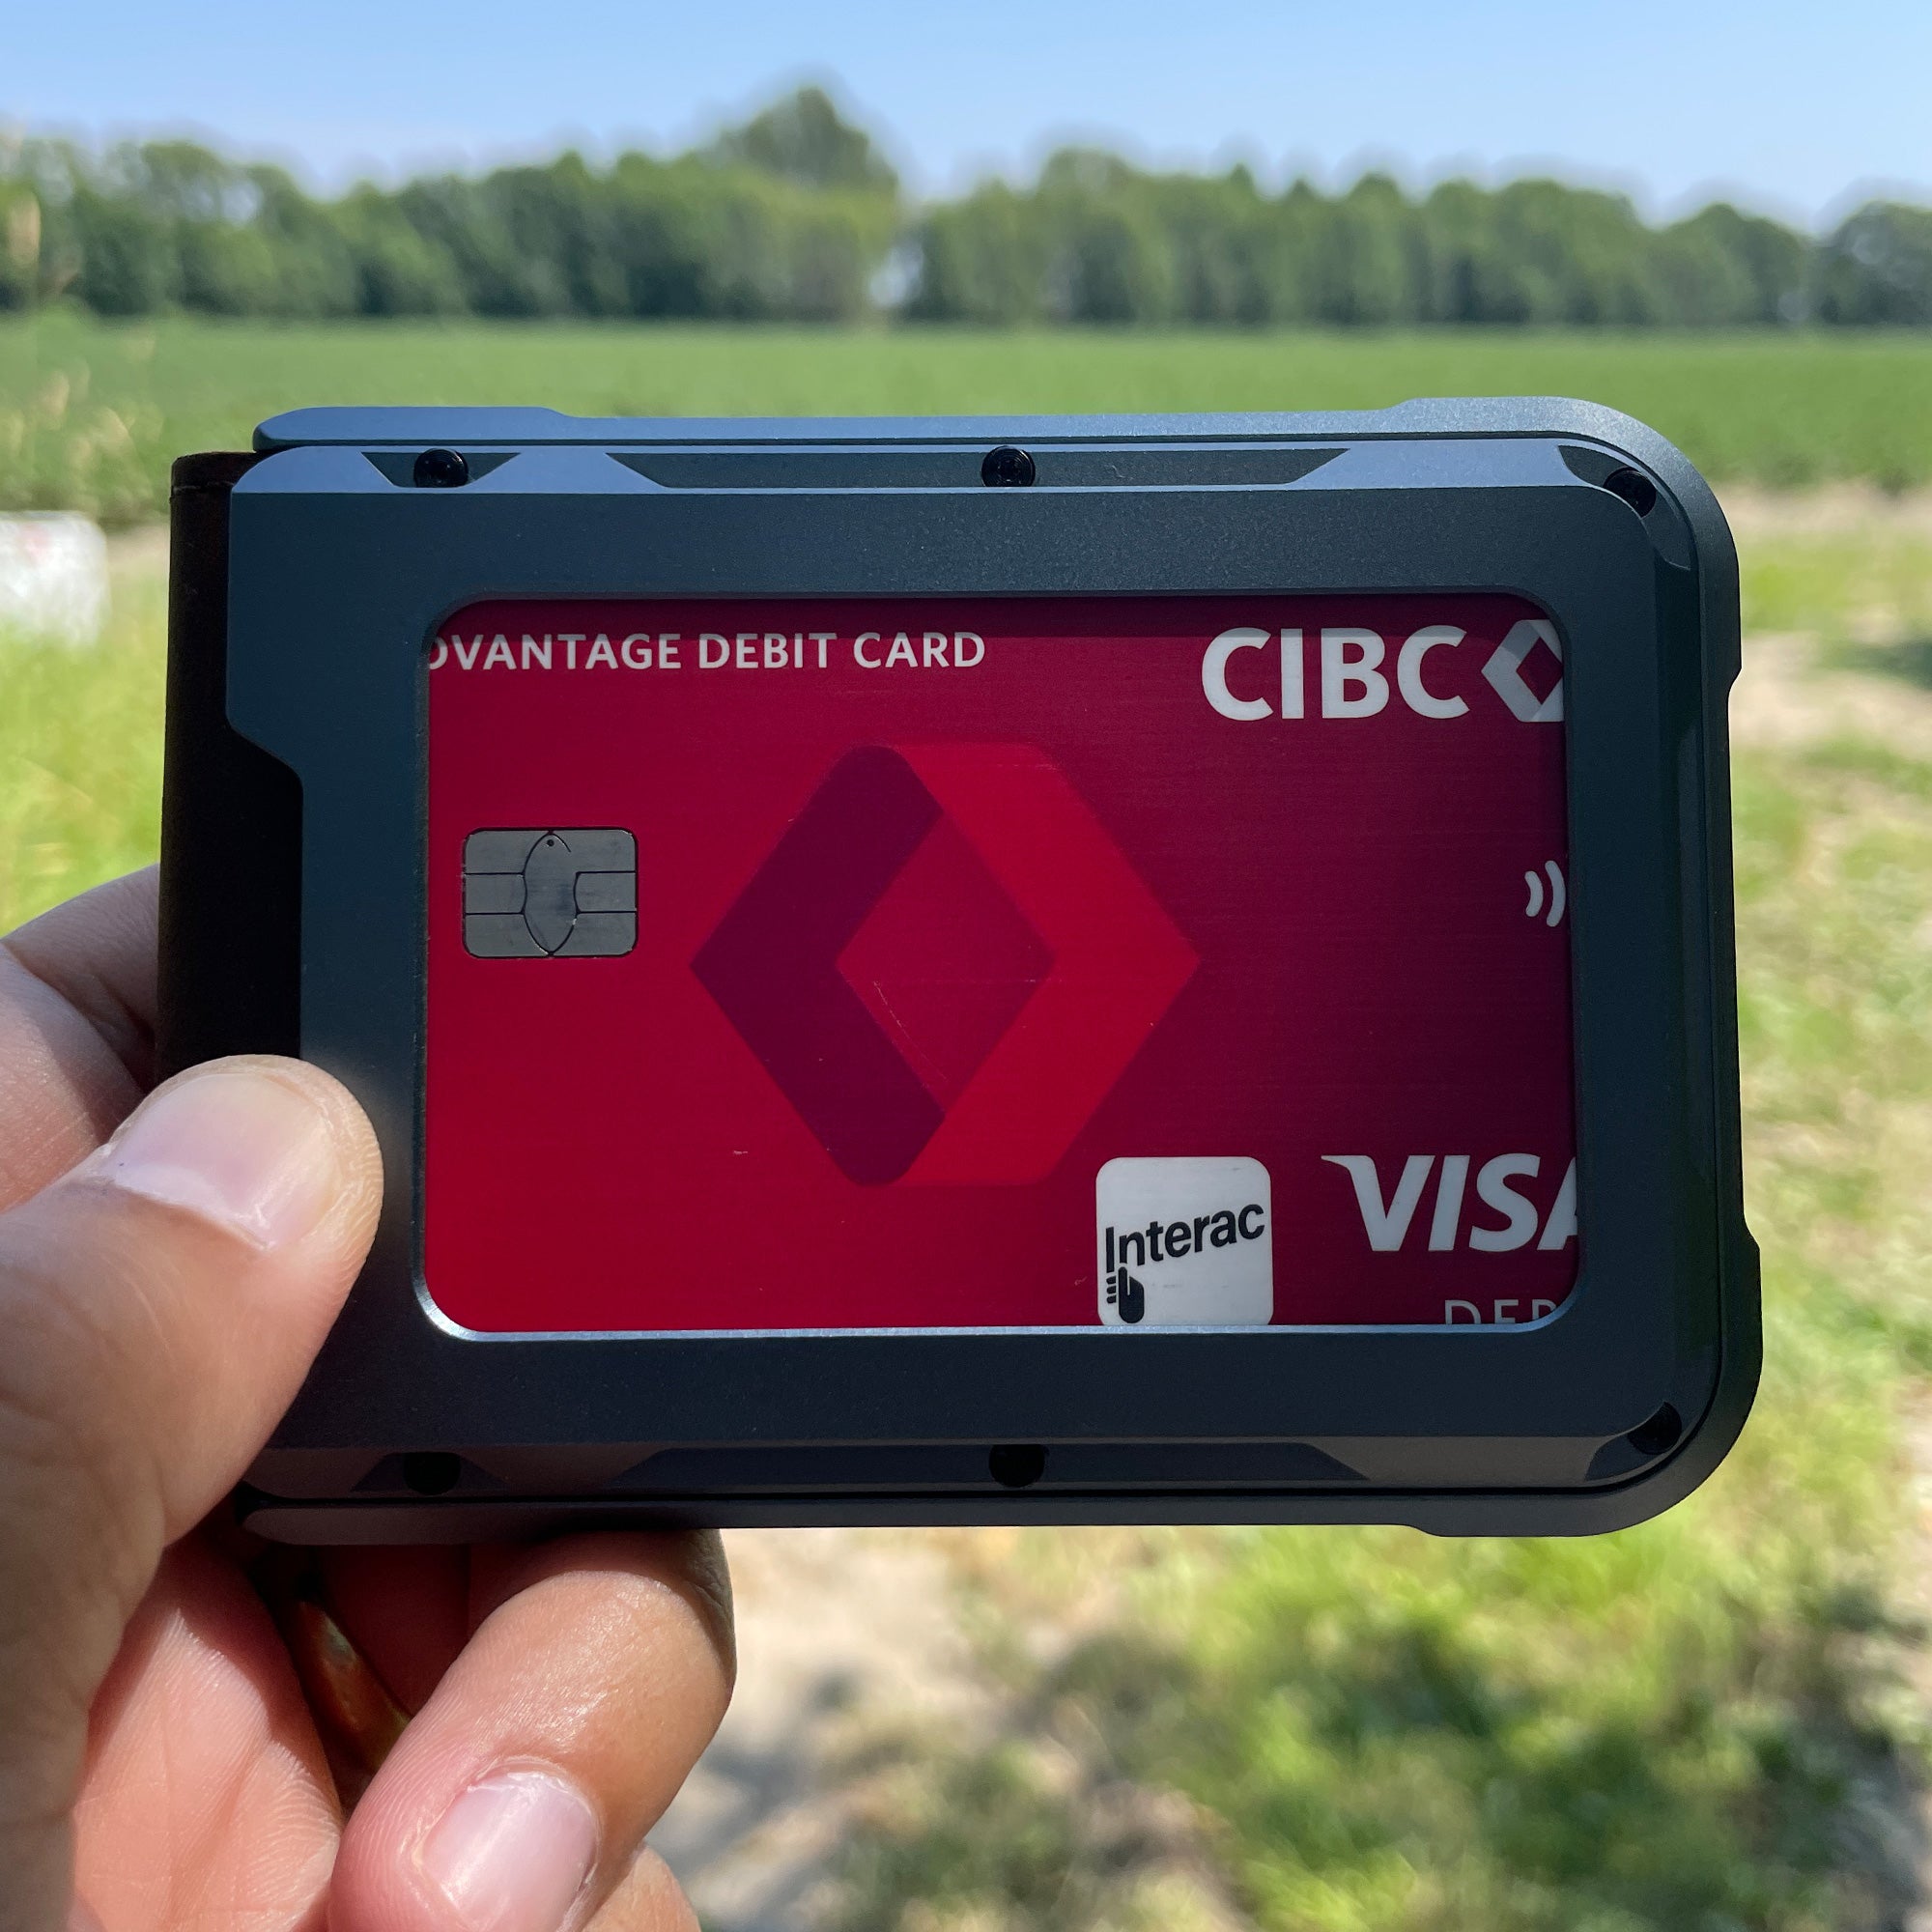 TSV Carbon Fiber Minimalist Wallet